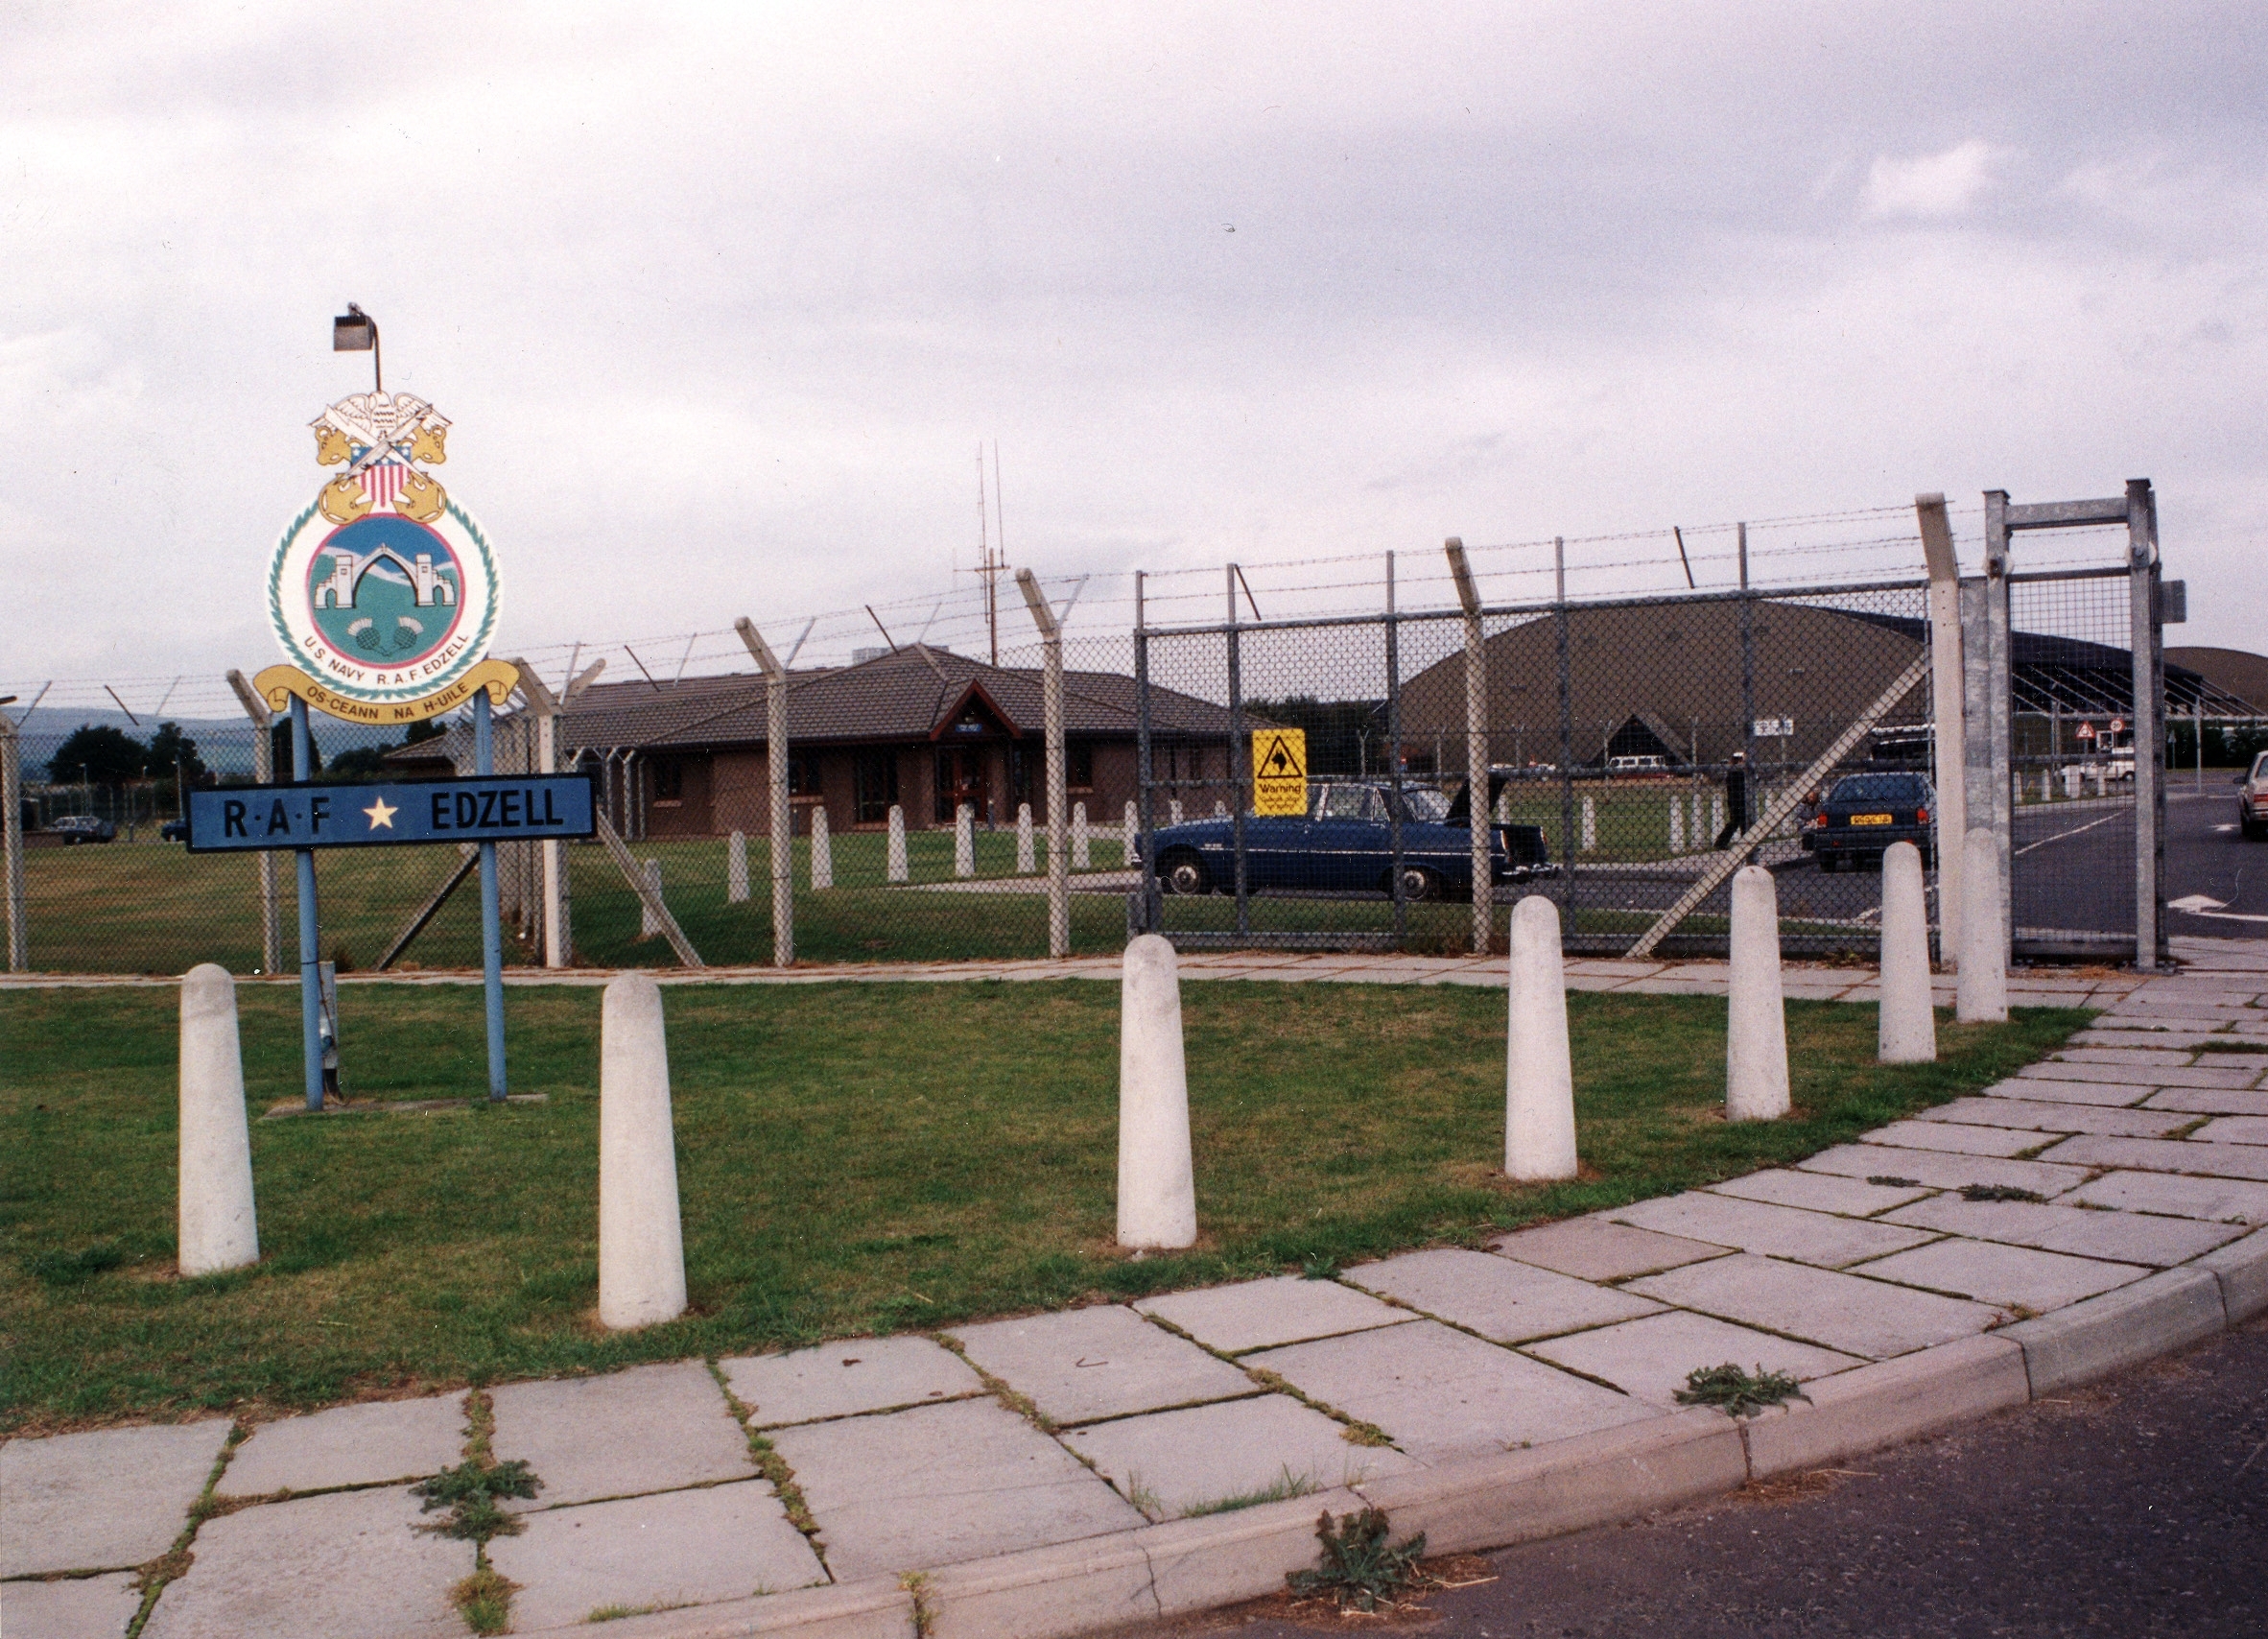 RAF Edzell in 1994.